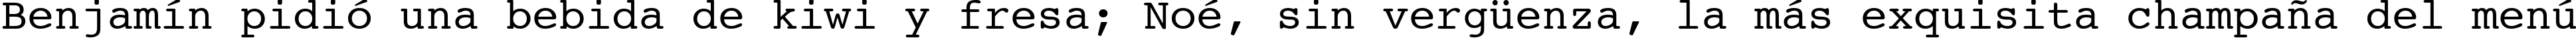 Пример написания шрифтом Courier 10 Pitch BT текста на испанском